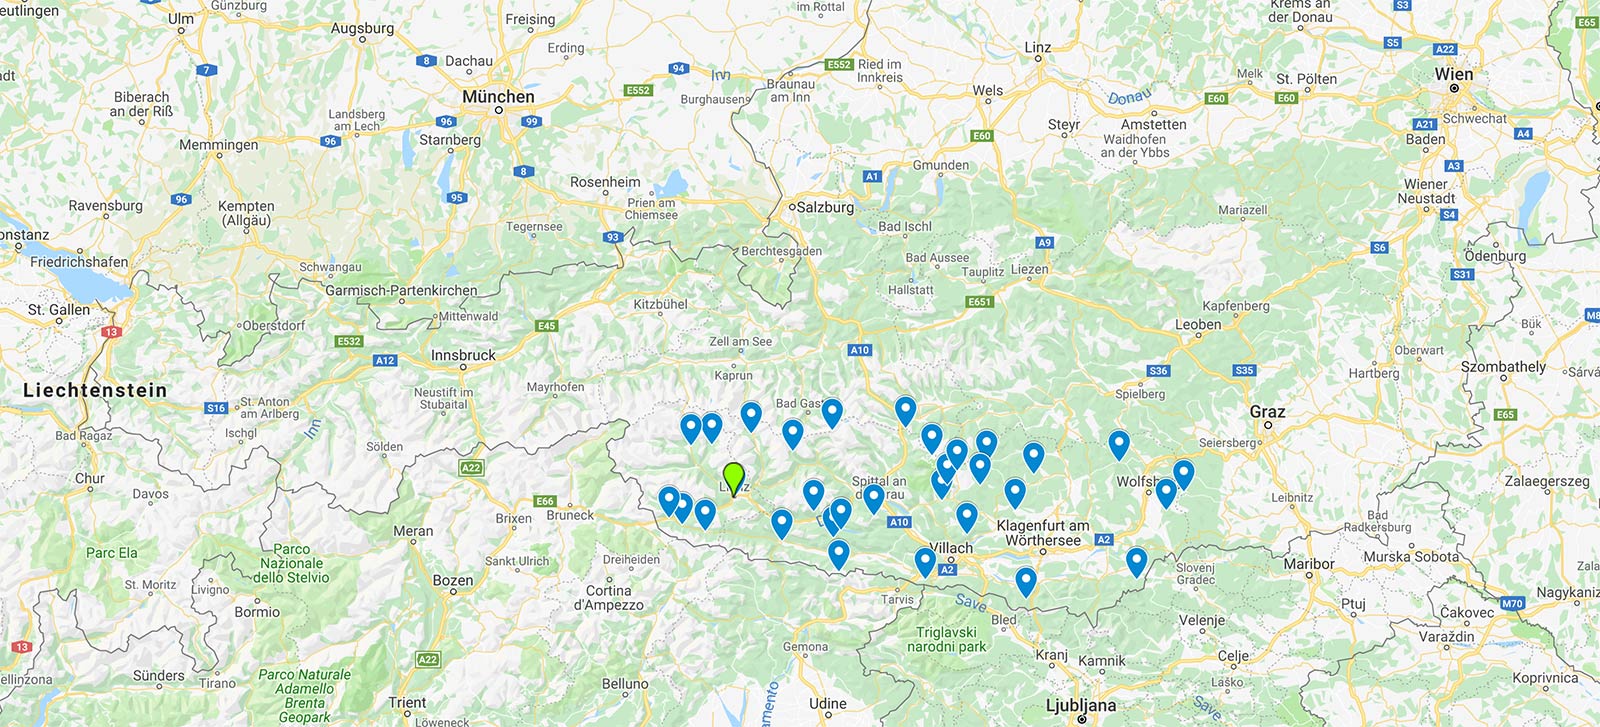 topskipass_kaernten_osttirol_Skigebiete_uebersicht_saisonkarte_2021-2022